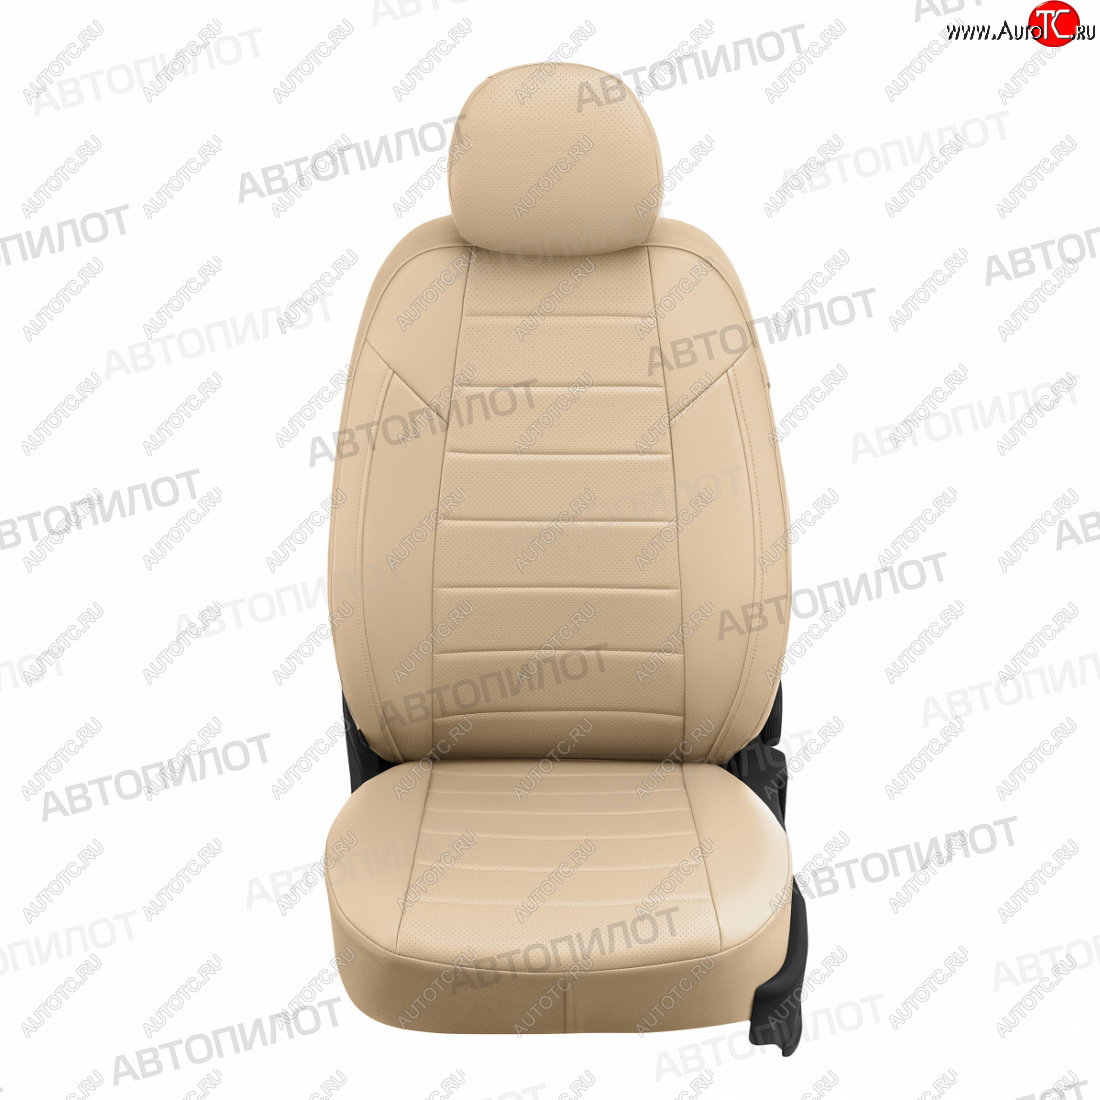 13 449 р. Чехлы сидений (экокожа) Автопилот  Hyundai Terracan  1 HP (2001-2007) (бежевый)